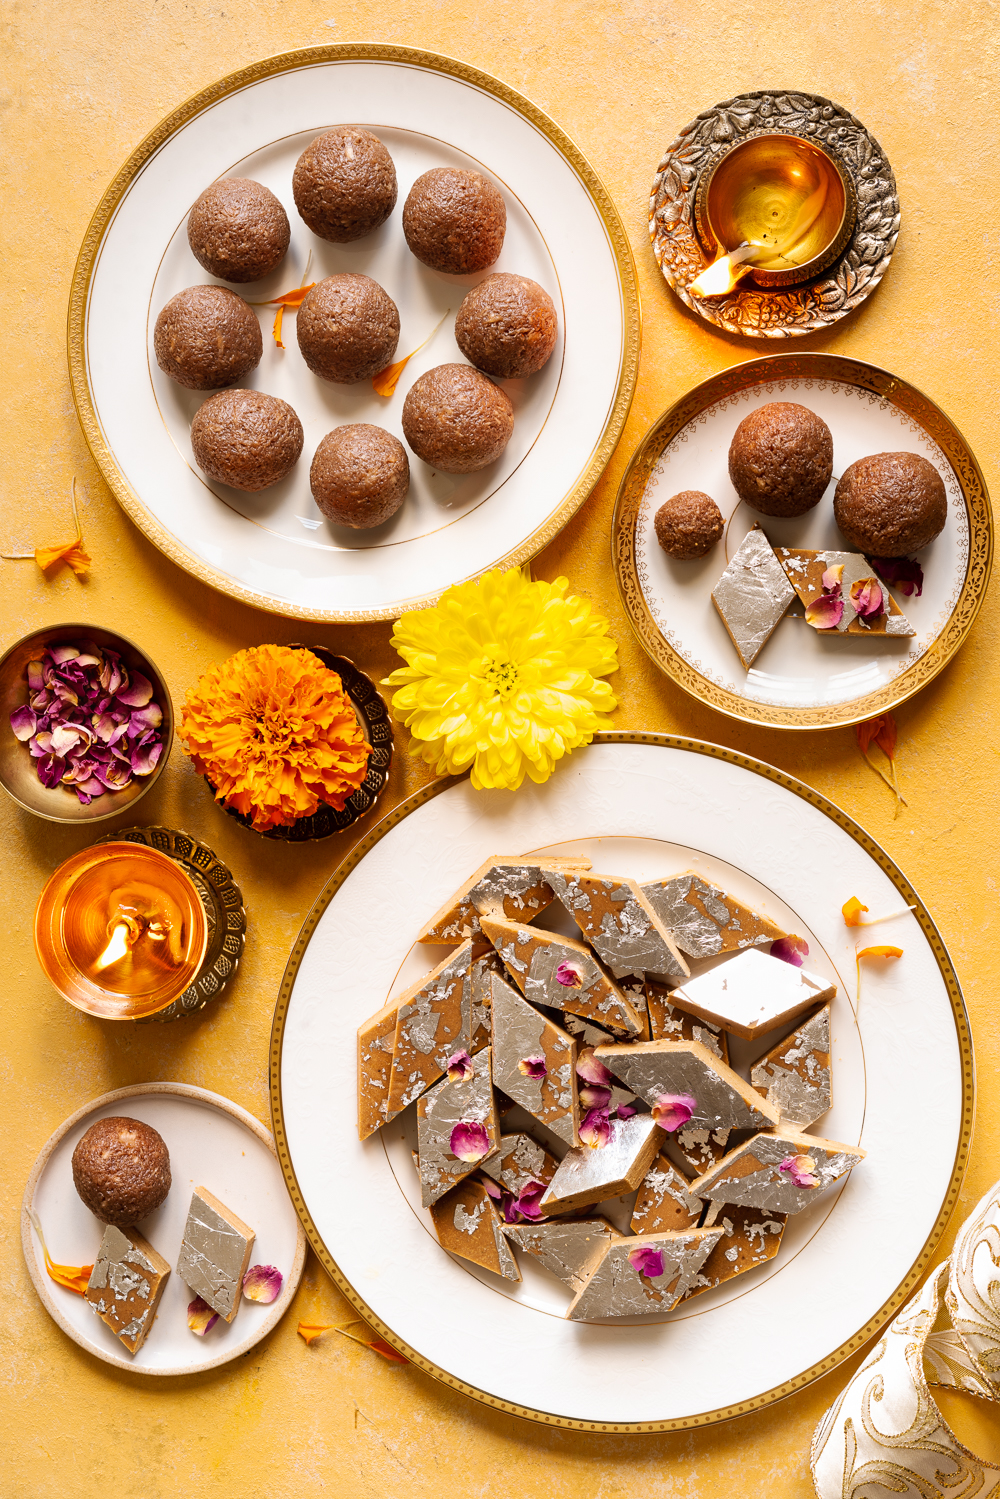 Peanut Katli And Laddoo - Two Diwali Special Indian Desserts